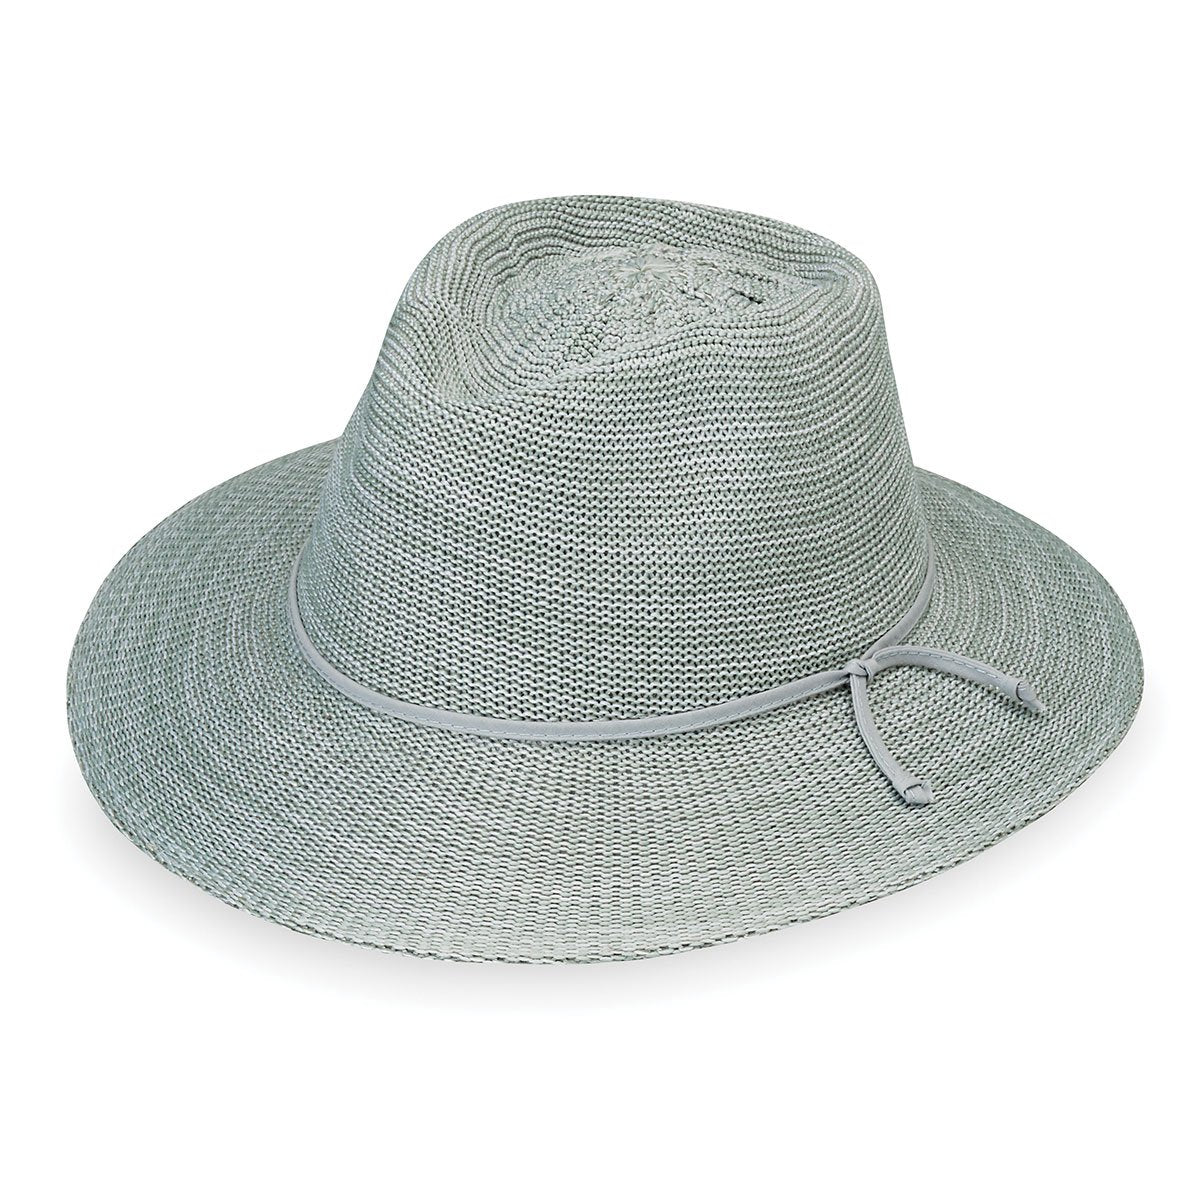 Wallaroo Hat Company: Women's Victoria Fedora - Seafoam